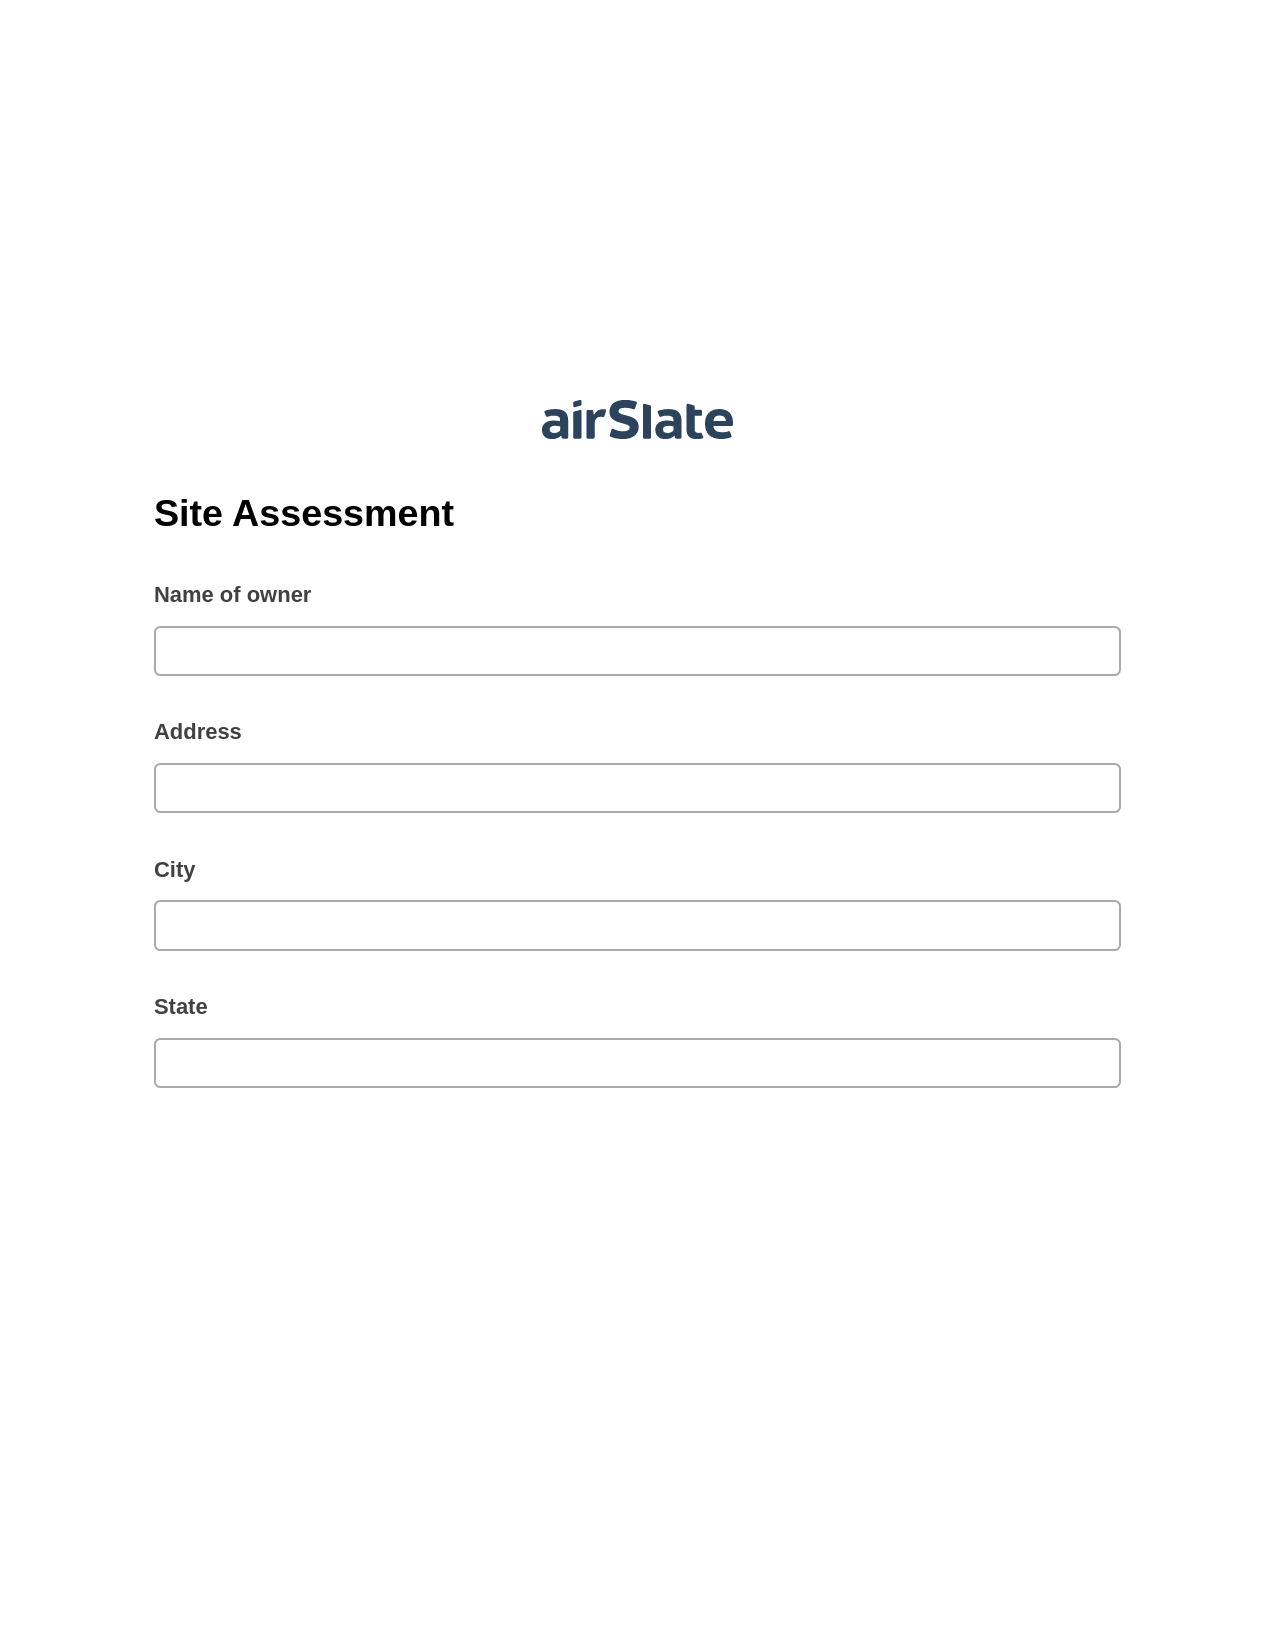 Site Assessment Pre-fill from CSV File Bot, Create NetSuite Records Bot, Slack Notification Postfinish Bot